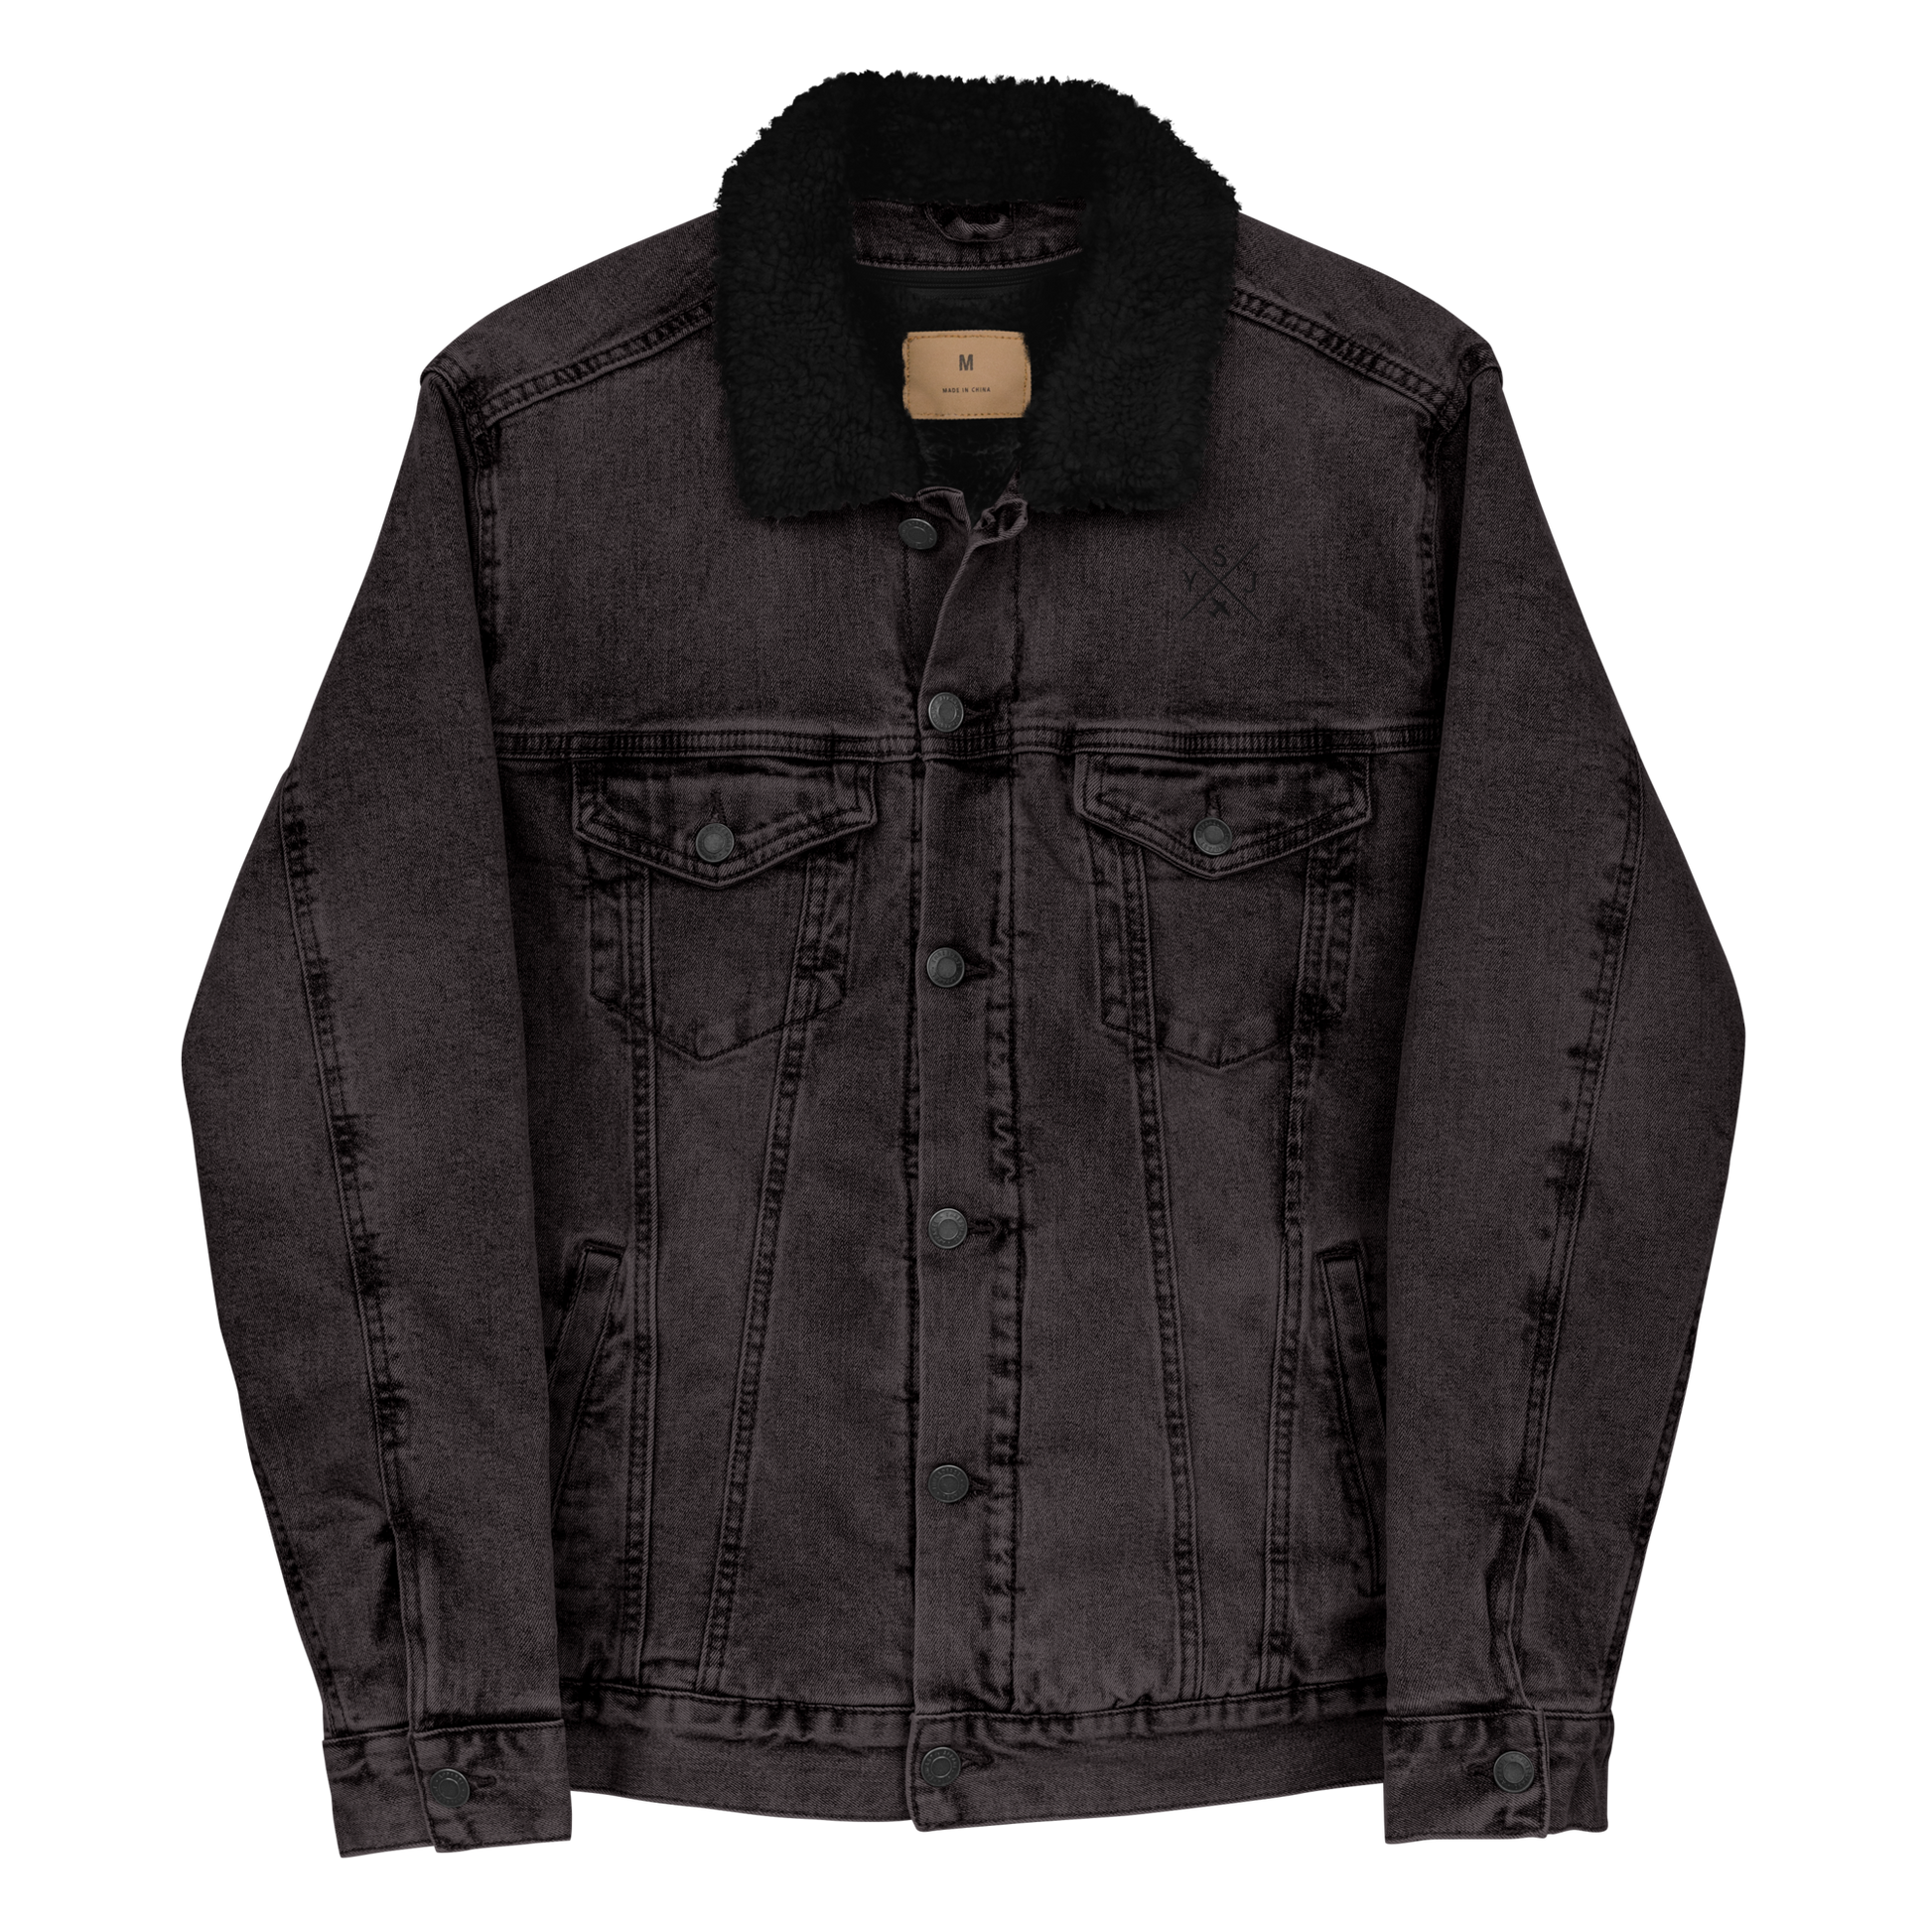 YHM Designs - YSJ Saint John Denim Sherpa Jacket - Crossed-X Design with Airport Code and Vintage Propliner - Black & White Embroidery - Image 06